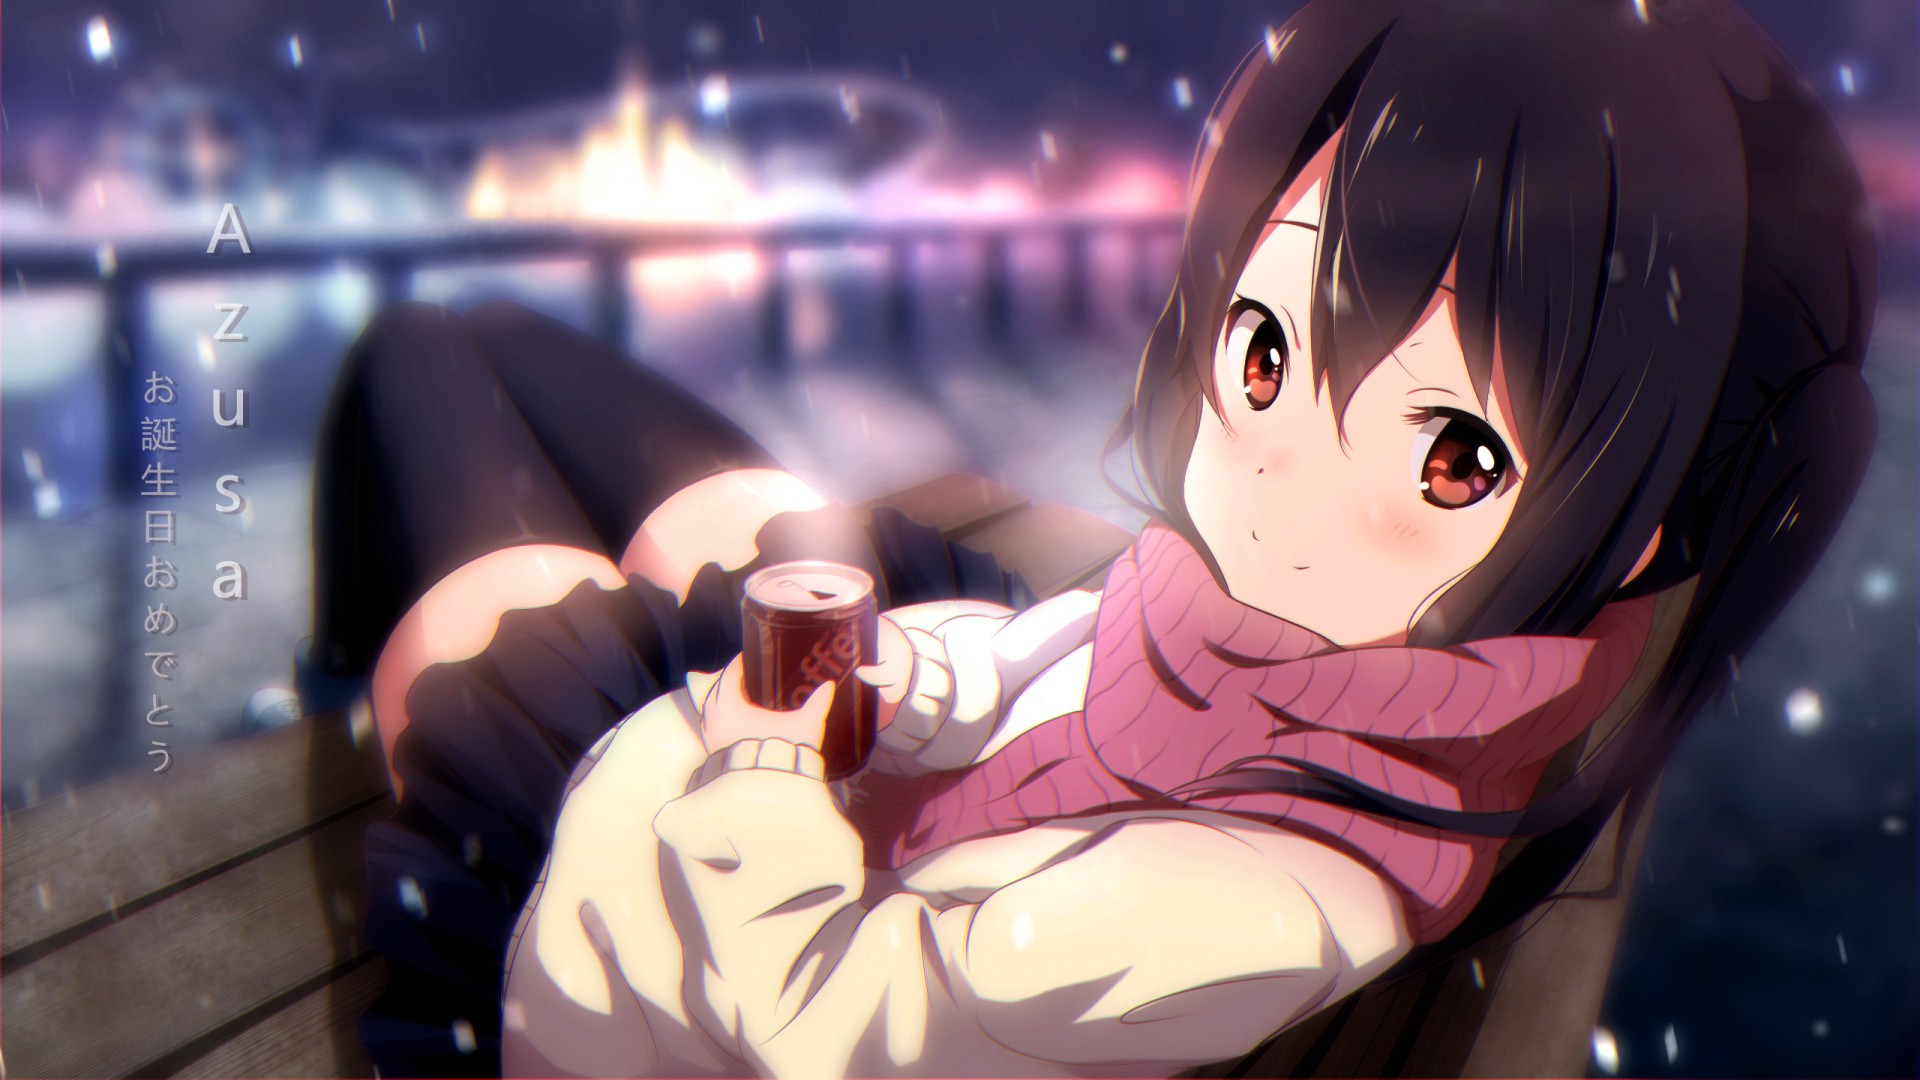 Anime Girl Drinking Coffee Wallpaper